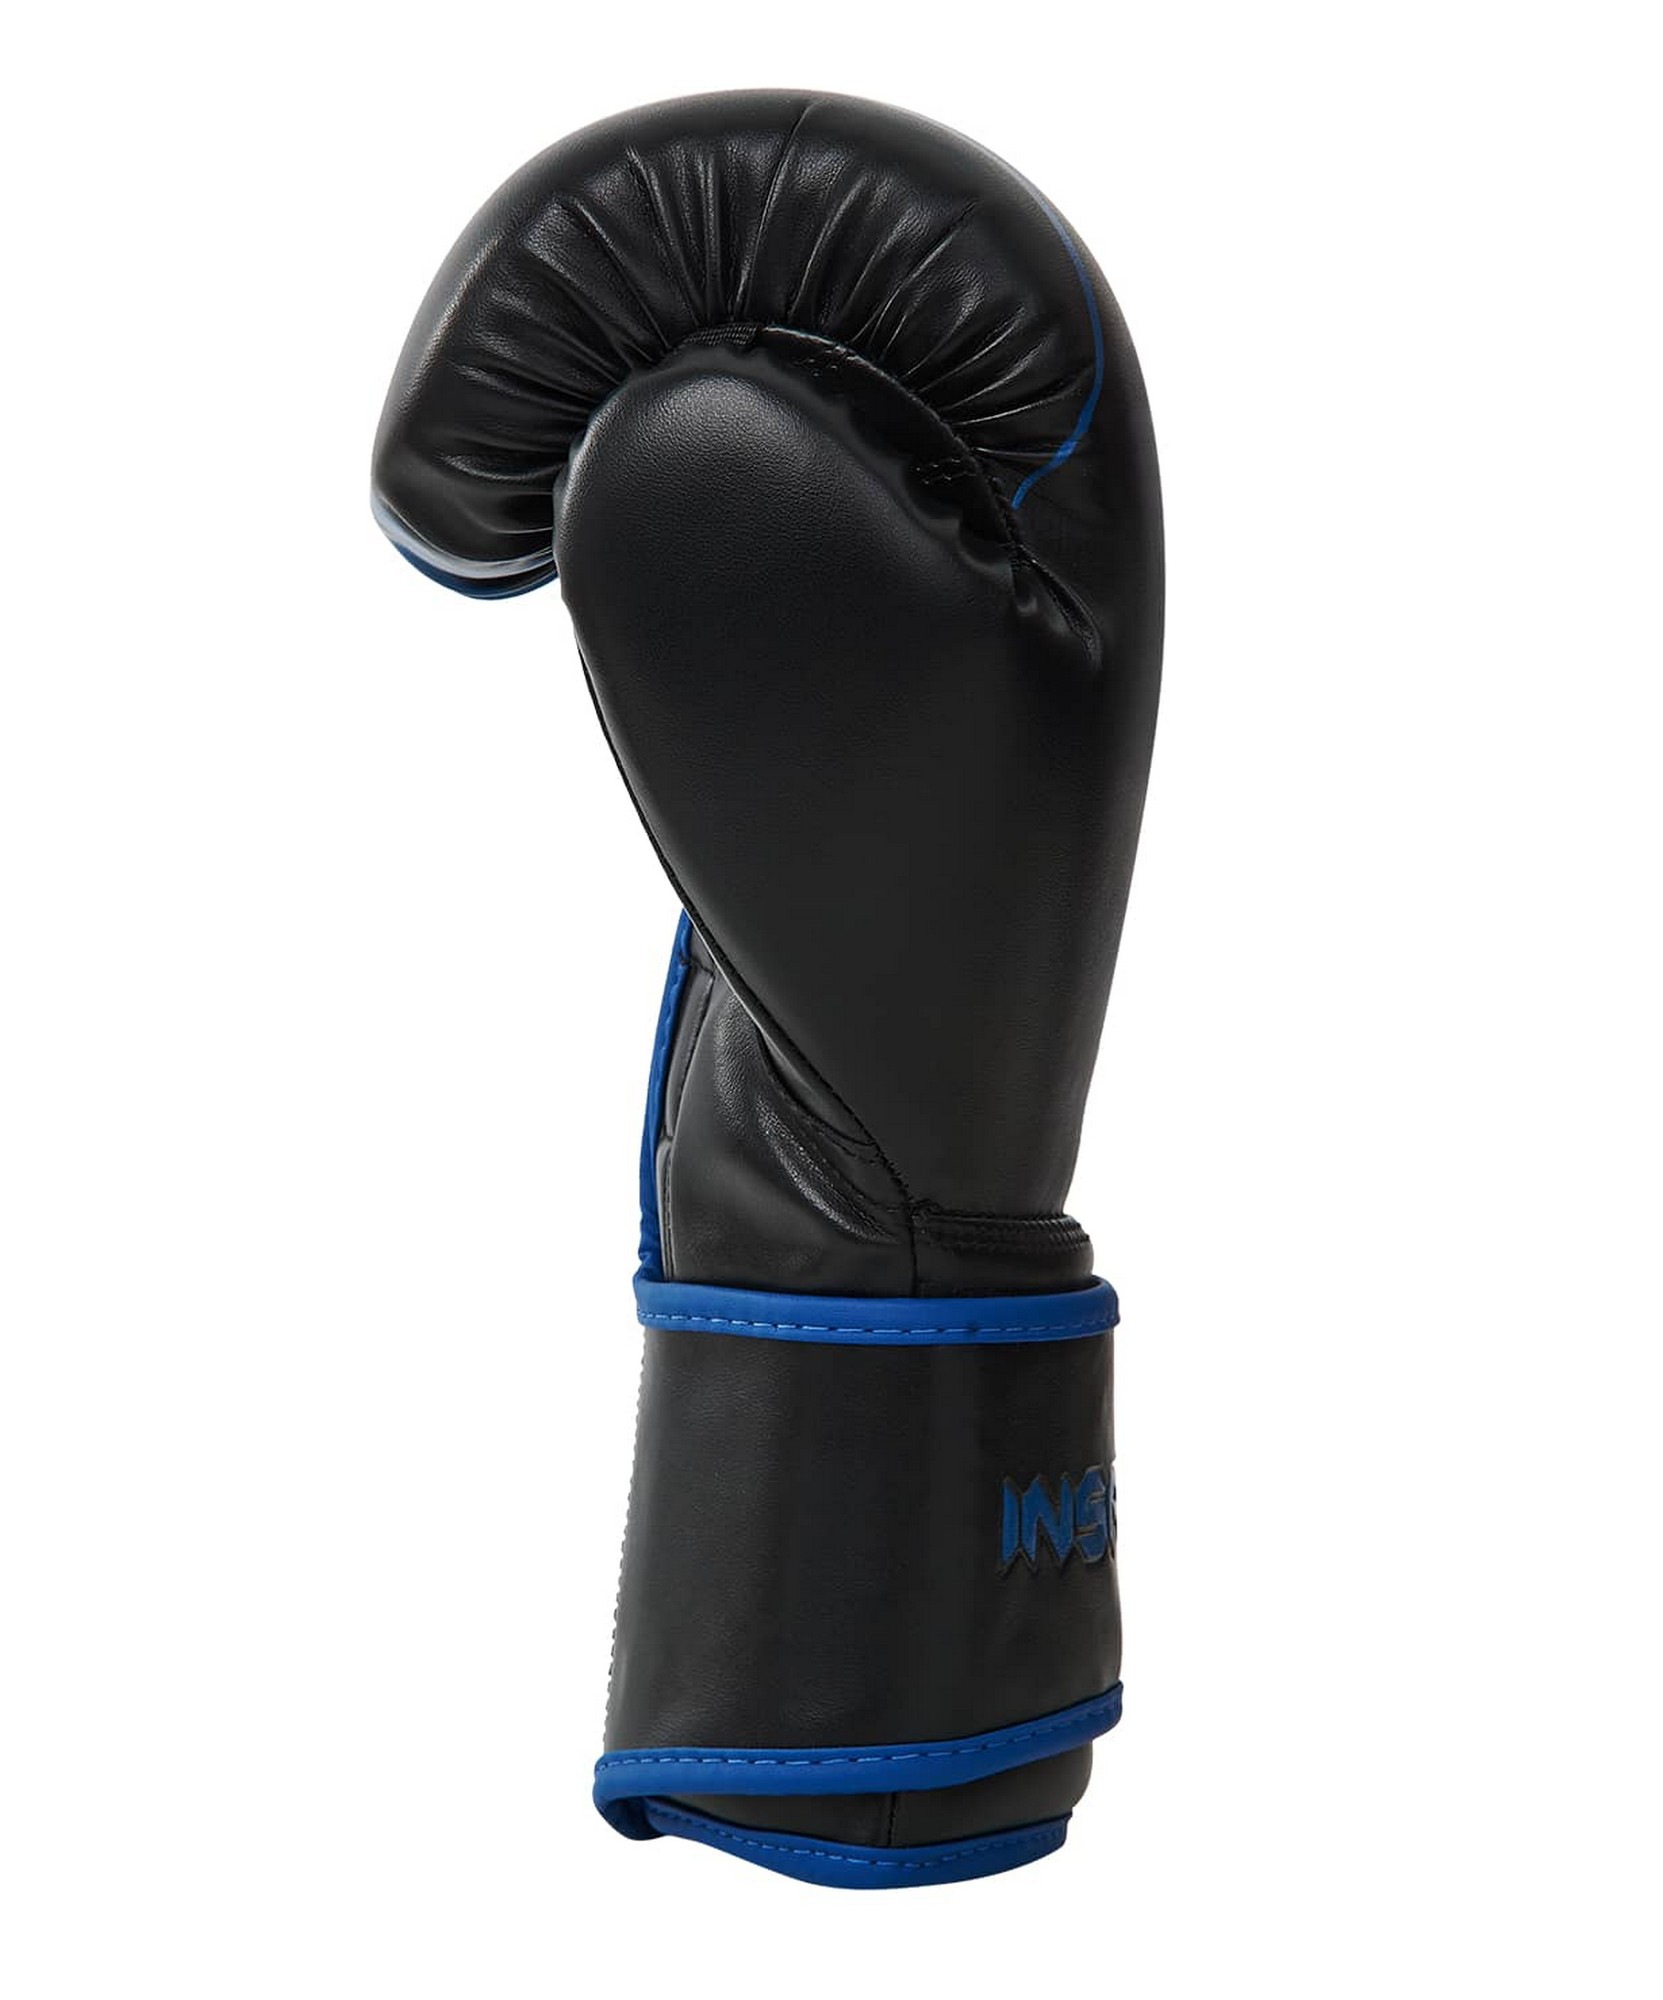 Перчатки боксерские Insane Montu ПУ, 10 oz, синий 1663_2000